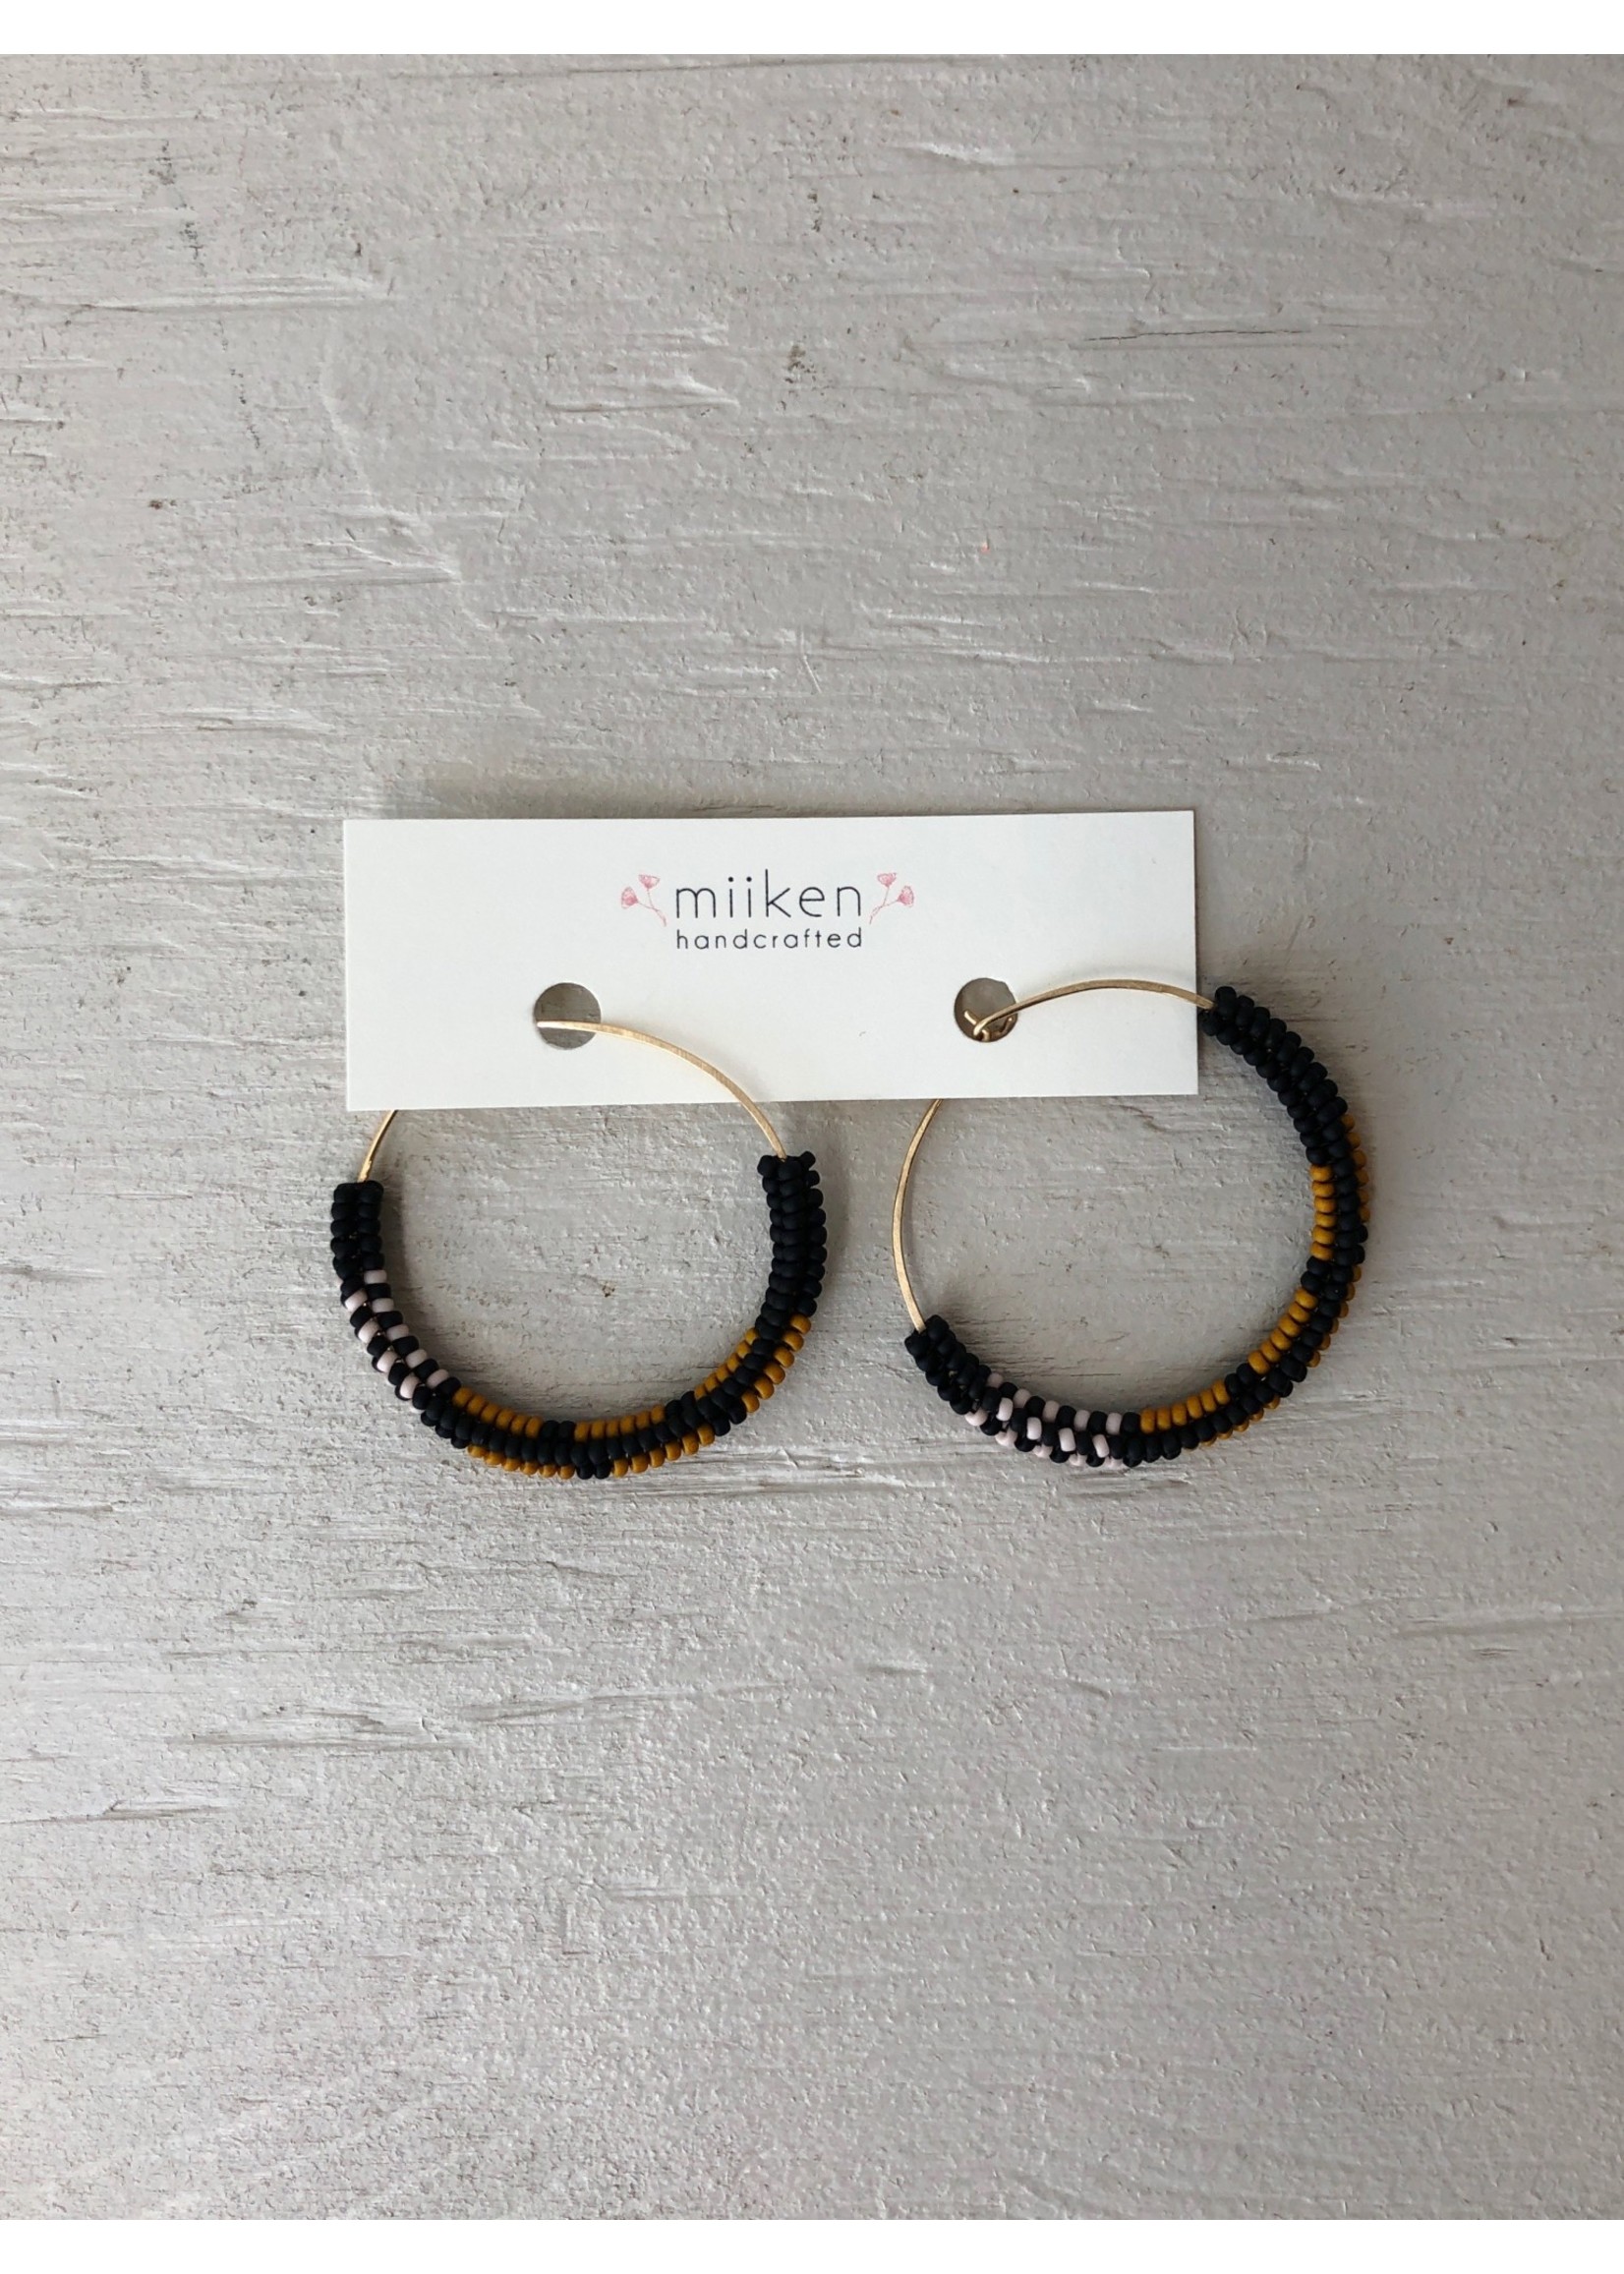 Miiken Handcrafted Hoops Earrings by Miiken Handcrafted